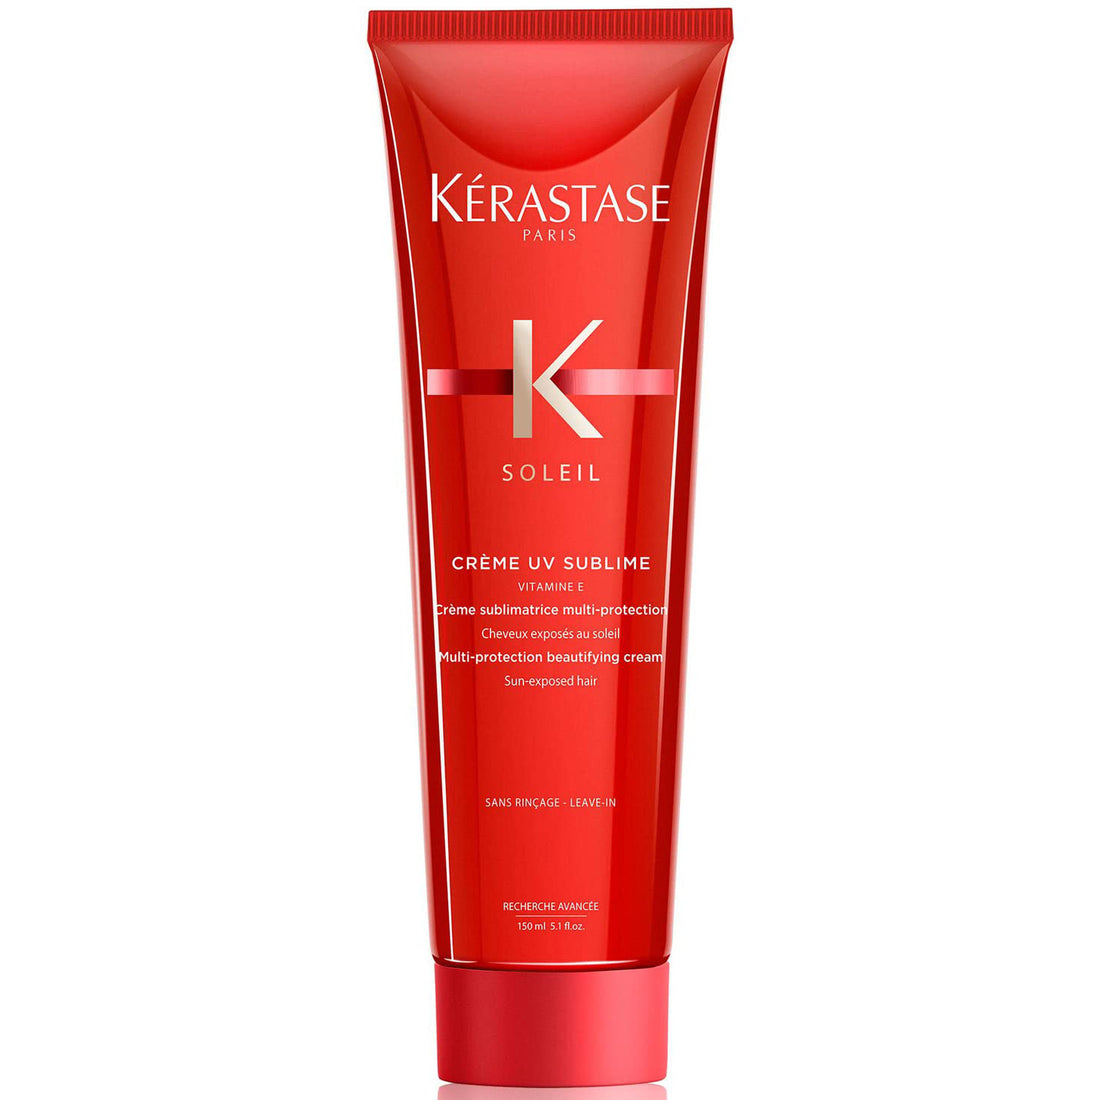 Kerastase Creme UV Sublime Hair Cream for After Sun, Sea &amp; Salt Exposure